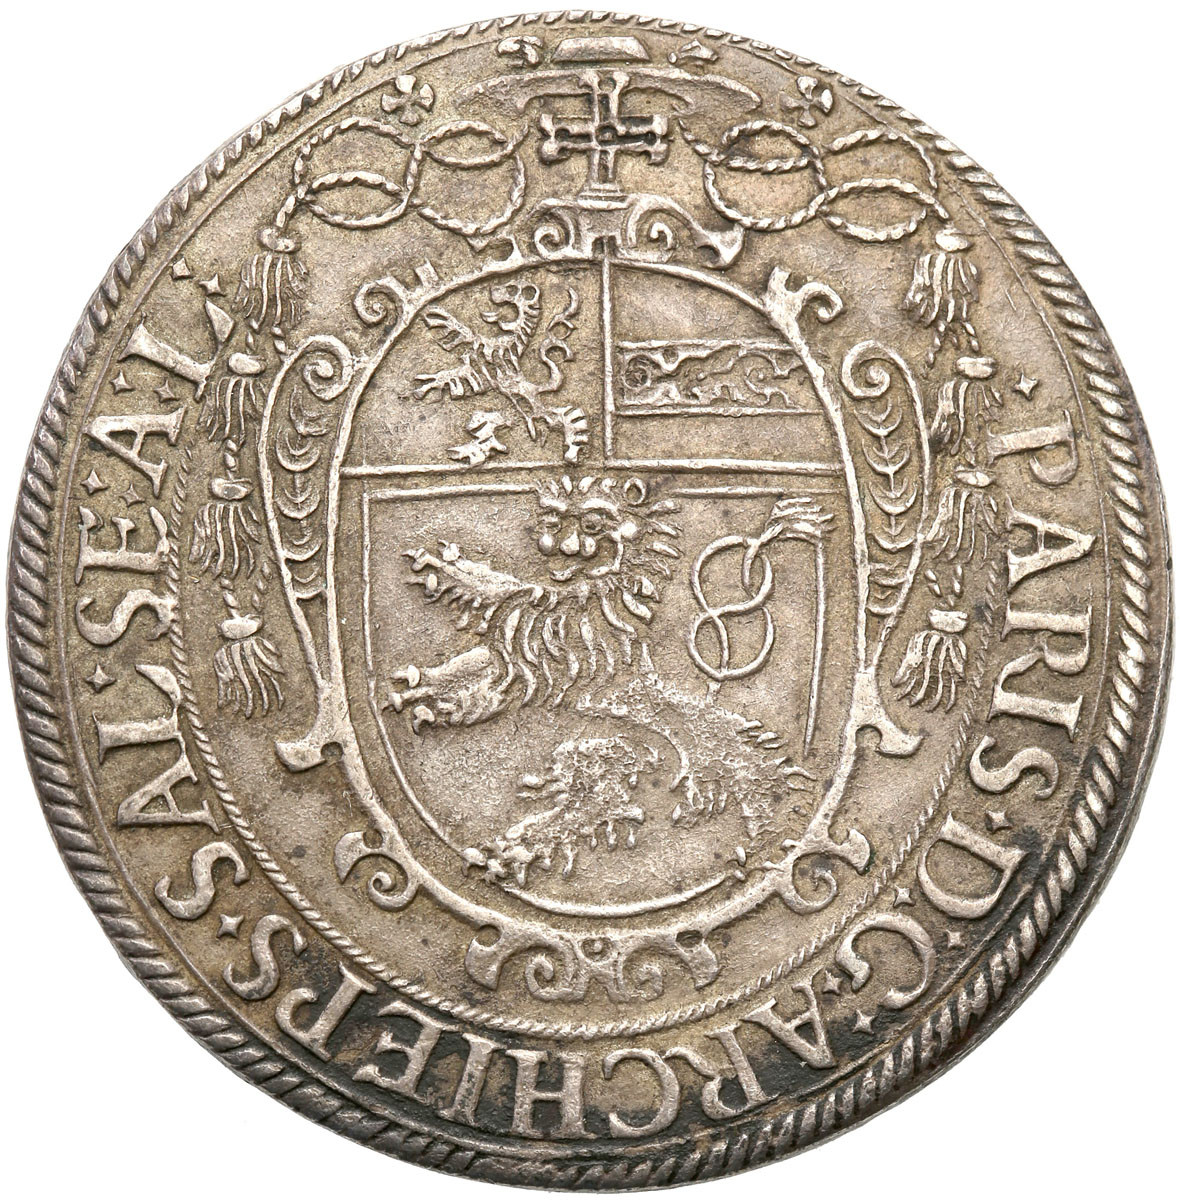 Austria, Salzburg. Paris graf Lodron (1619-1653). Talar 1623, Salzburg